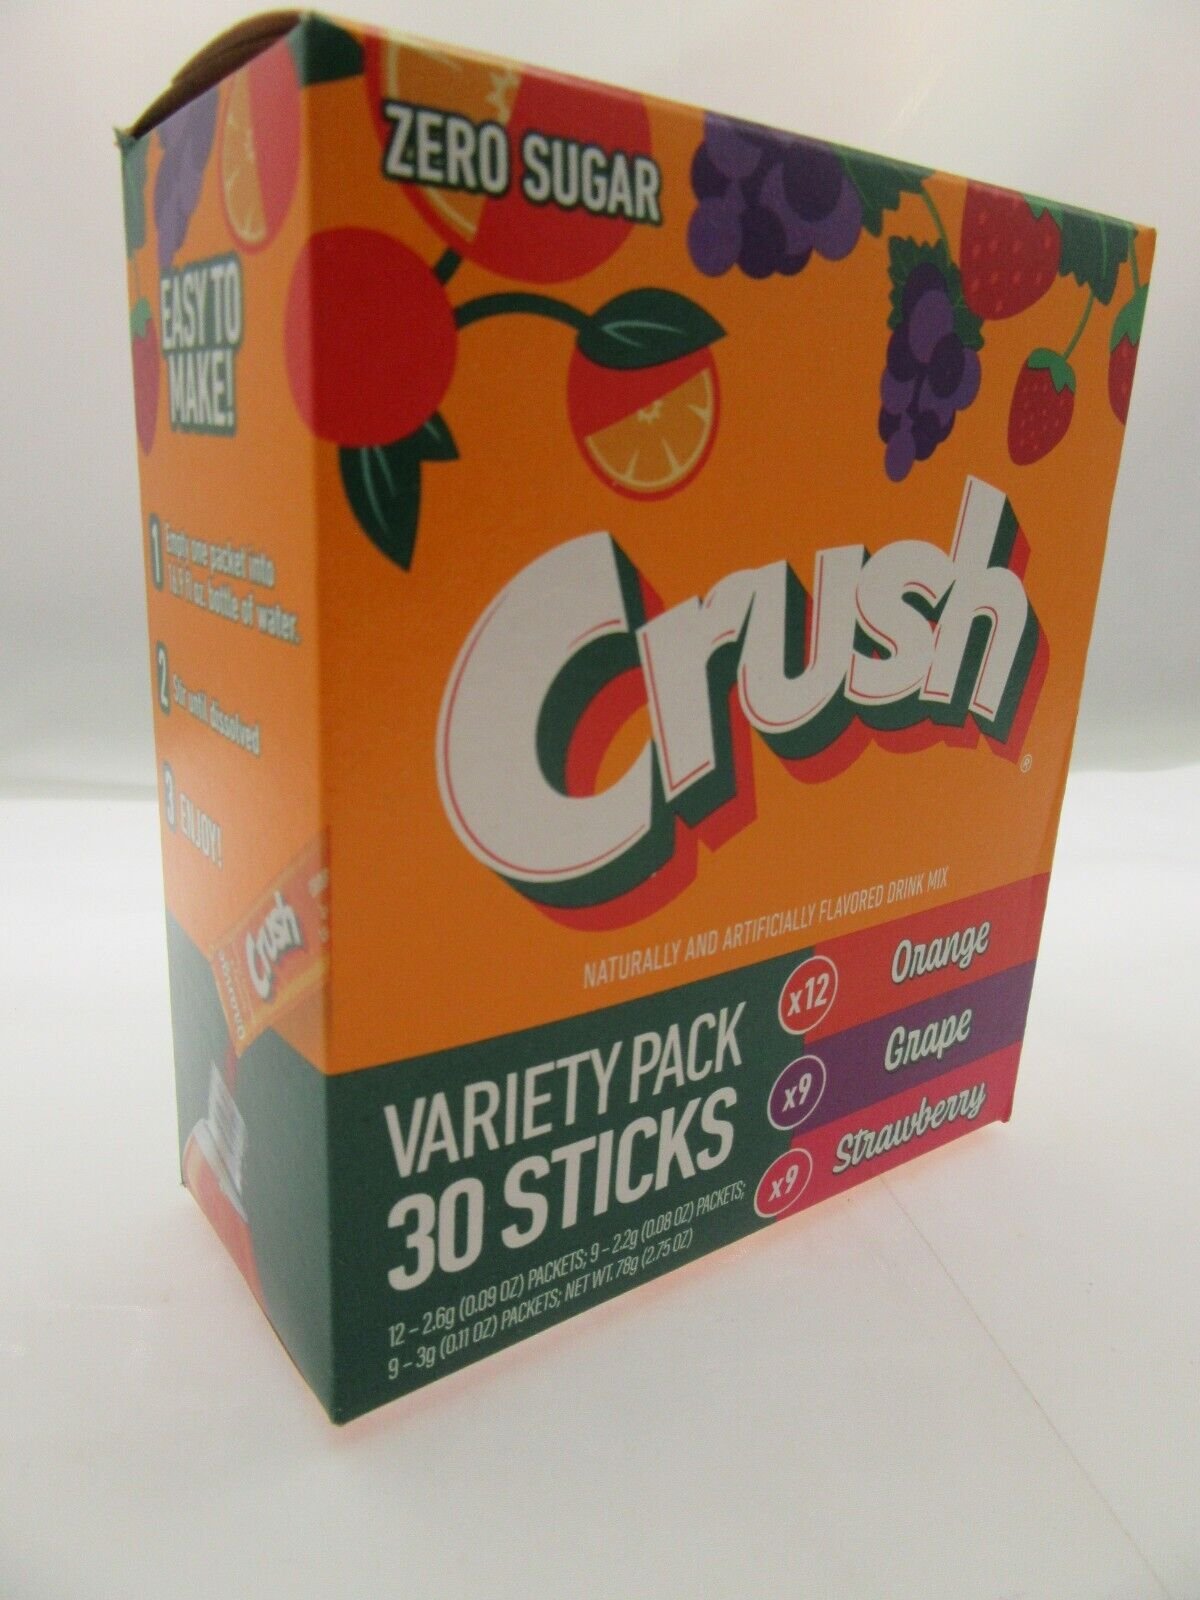 Variety Pack Crush ~ 30 Packets Per Box ~ Sugar Free ~ Drink Mix w/strawberry